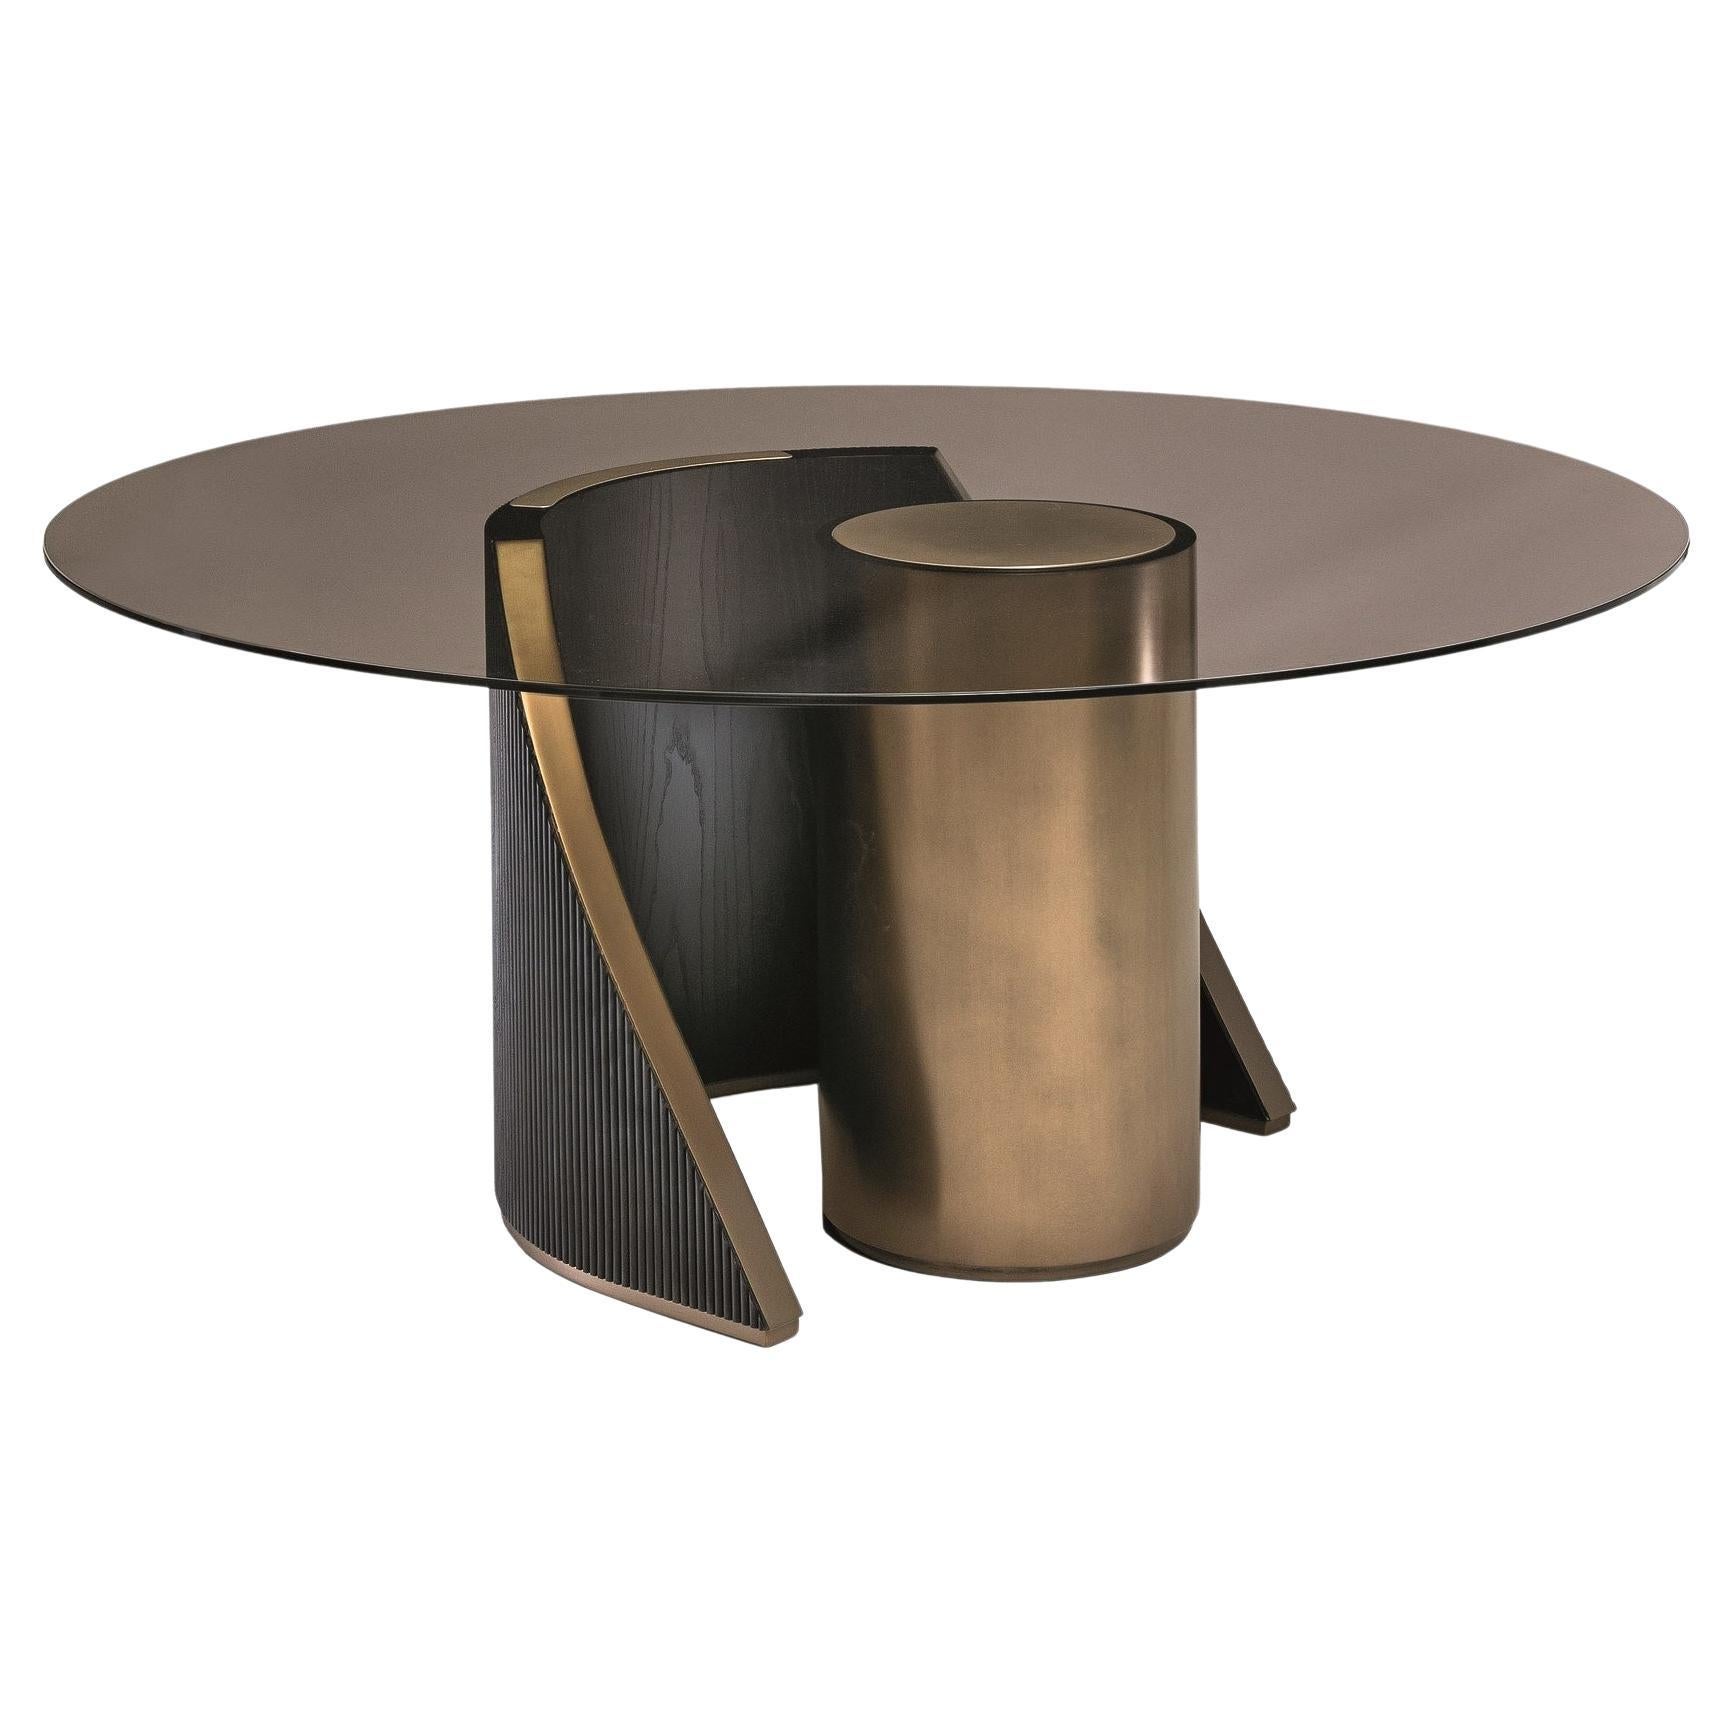 Custom Round Glass Dining Table in Light Bronze Finish